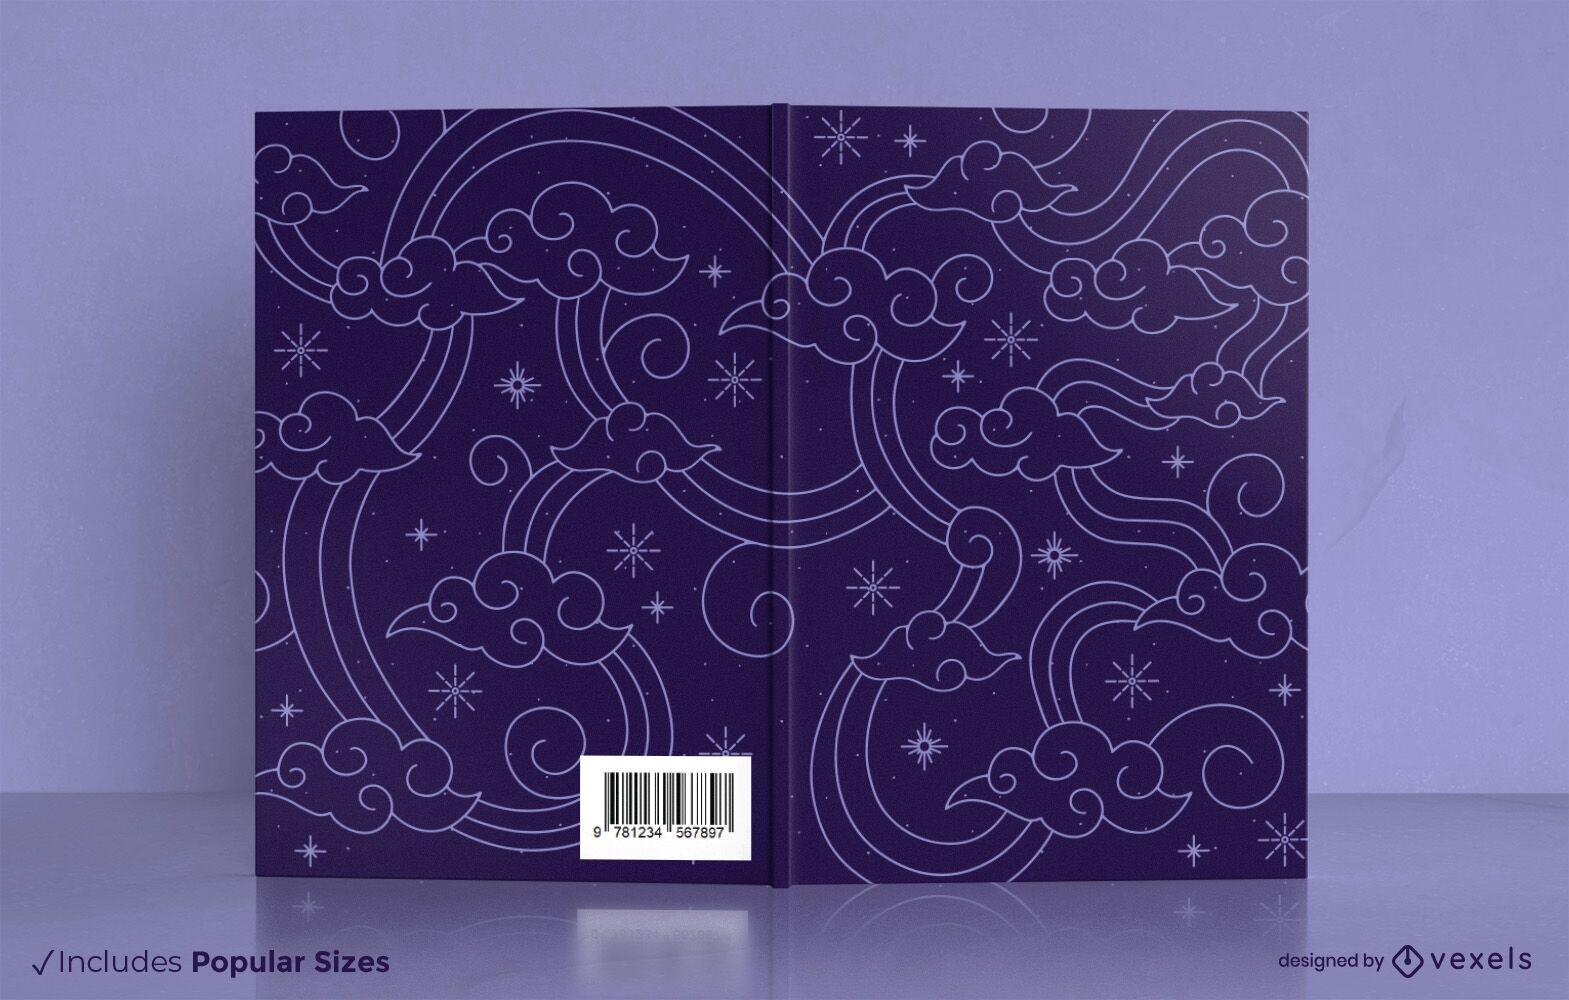 Wind and clouds stroke book cover design